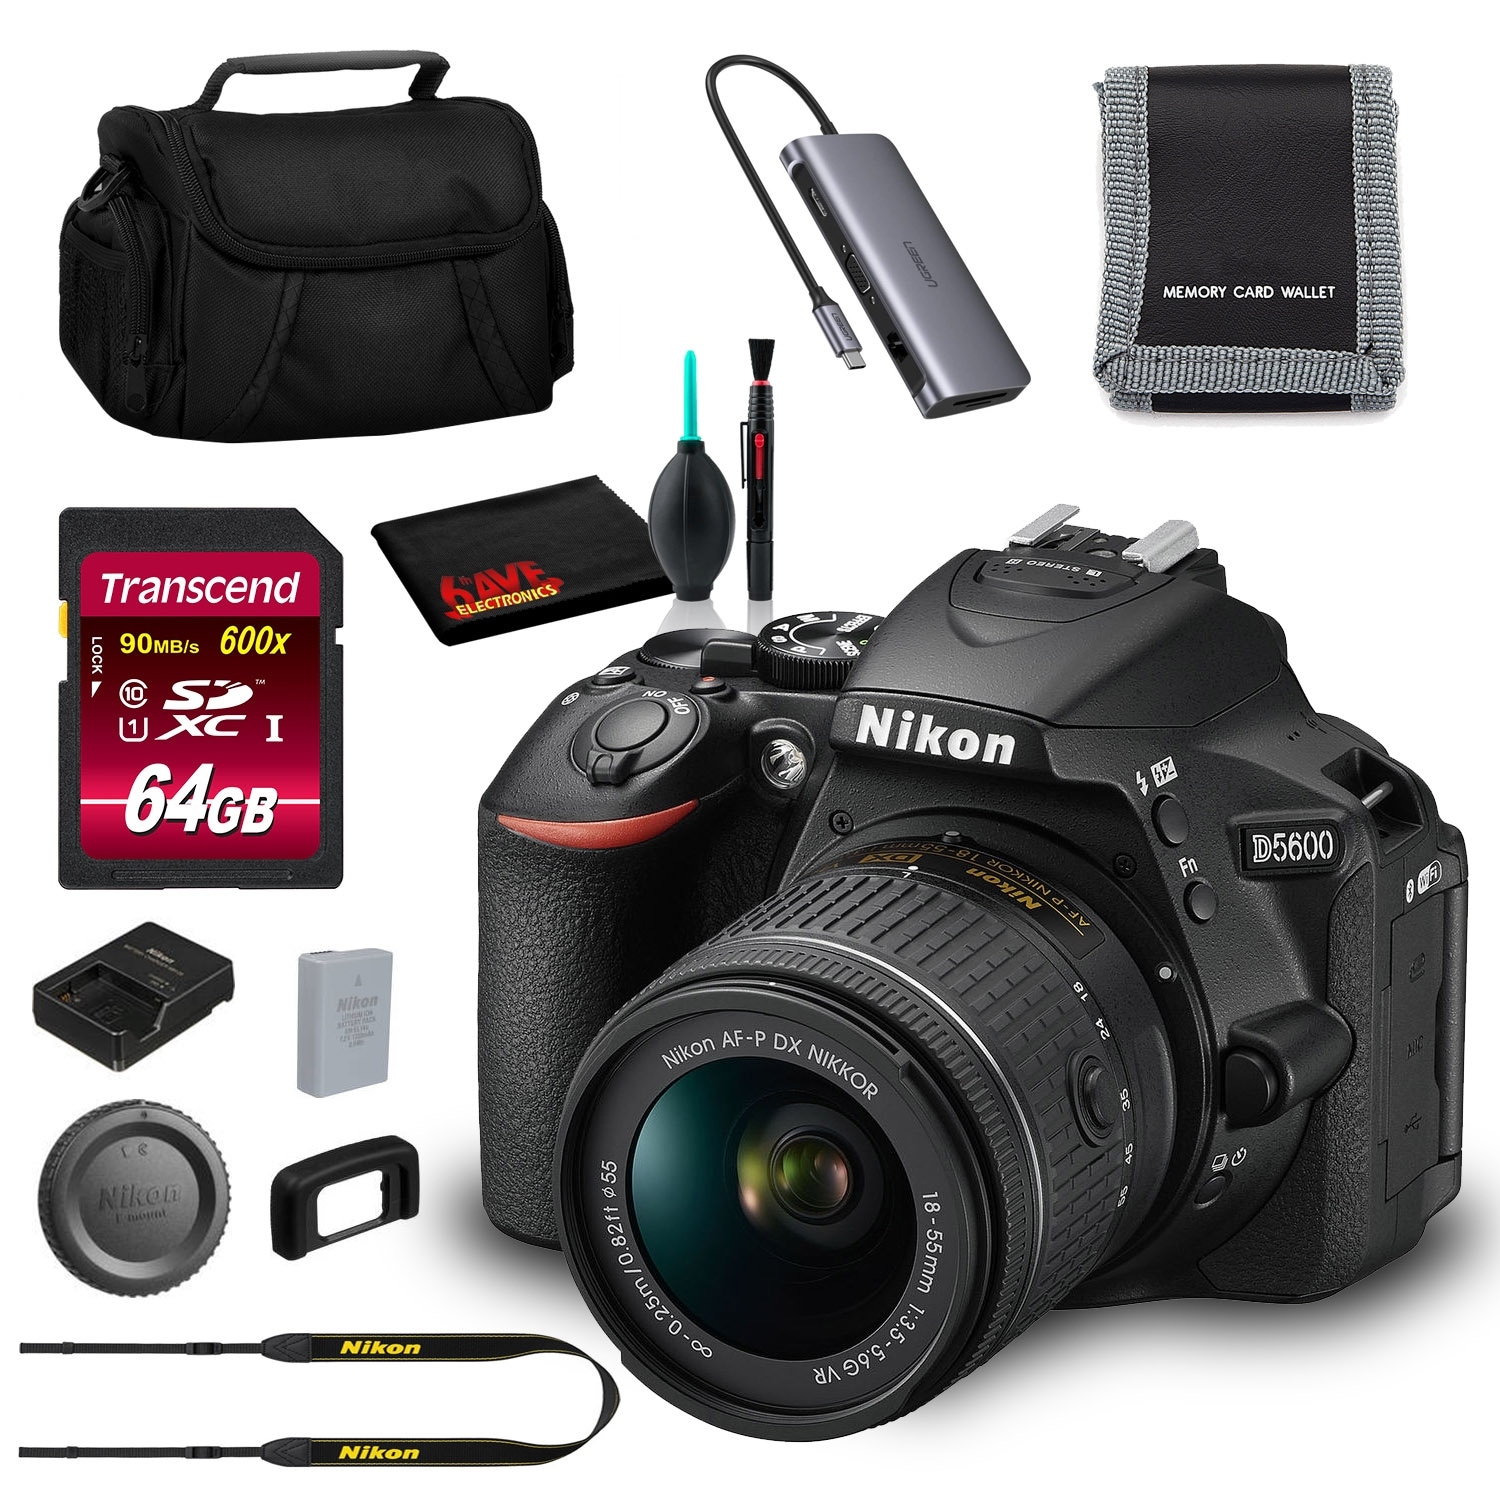 Nikon D5600 DSLR Camera with 18-55mm Lens (Intl Model) and 64GB Memory